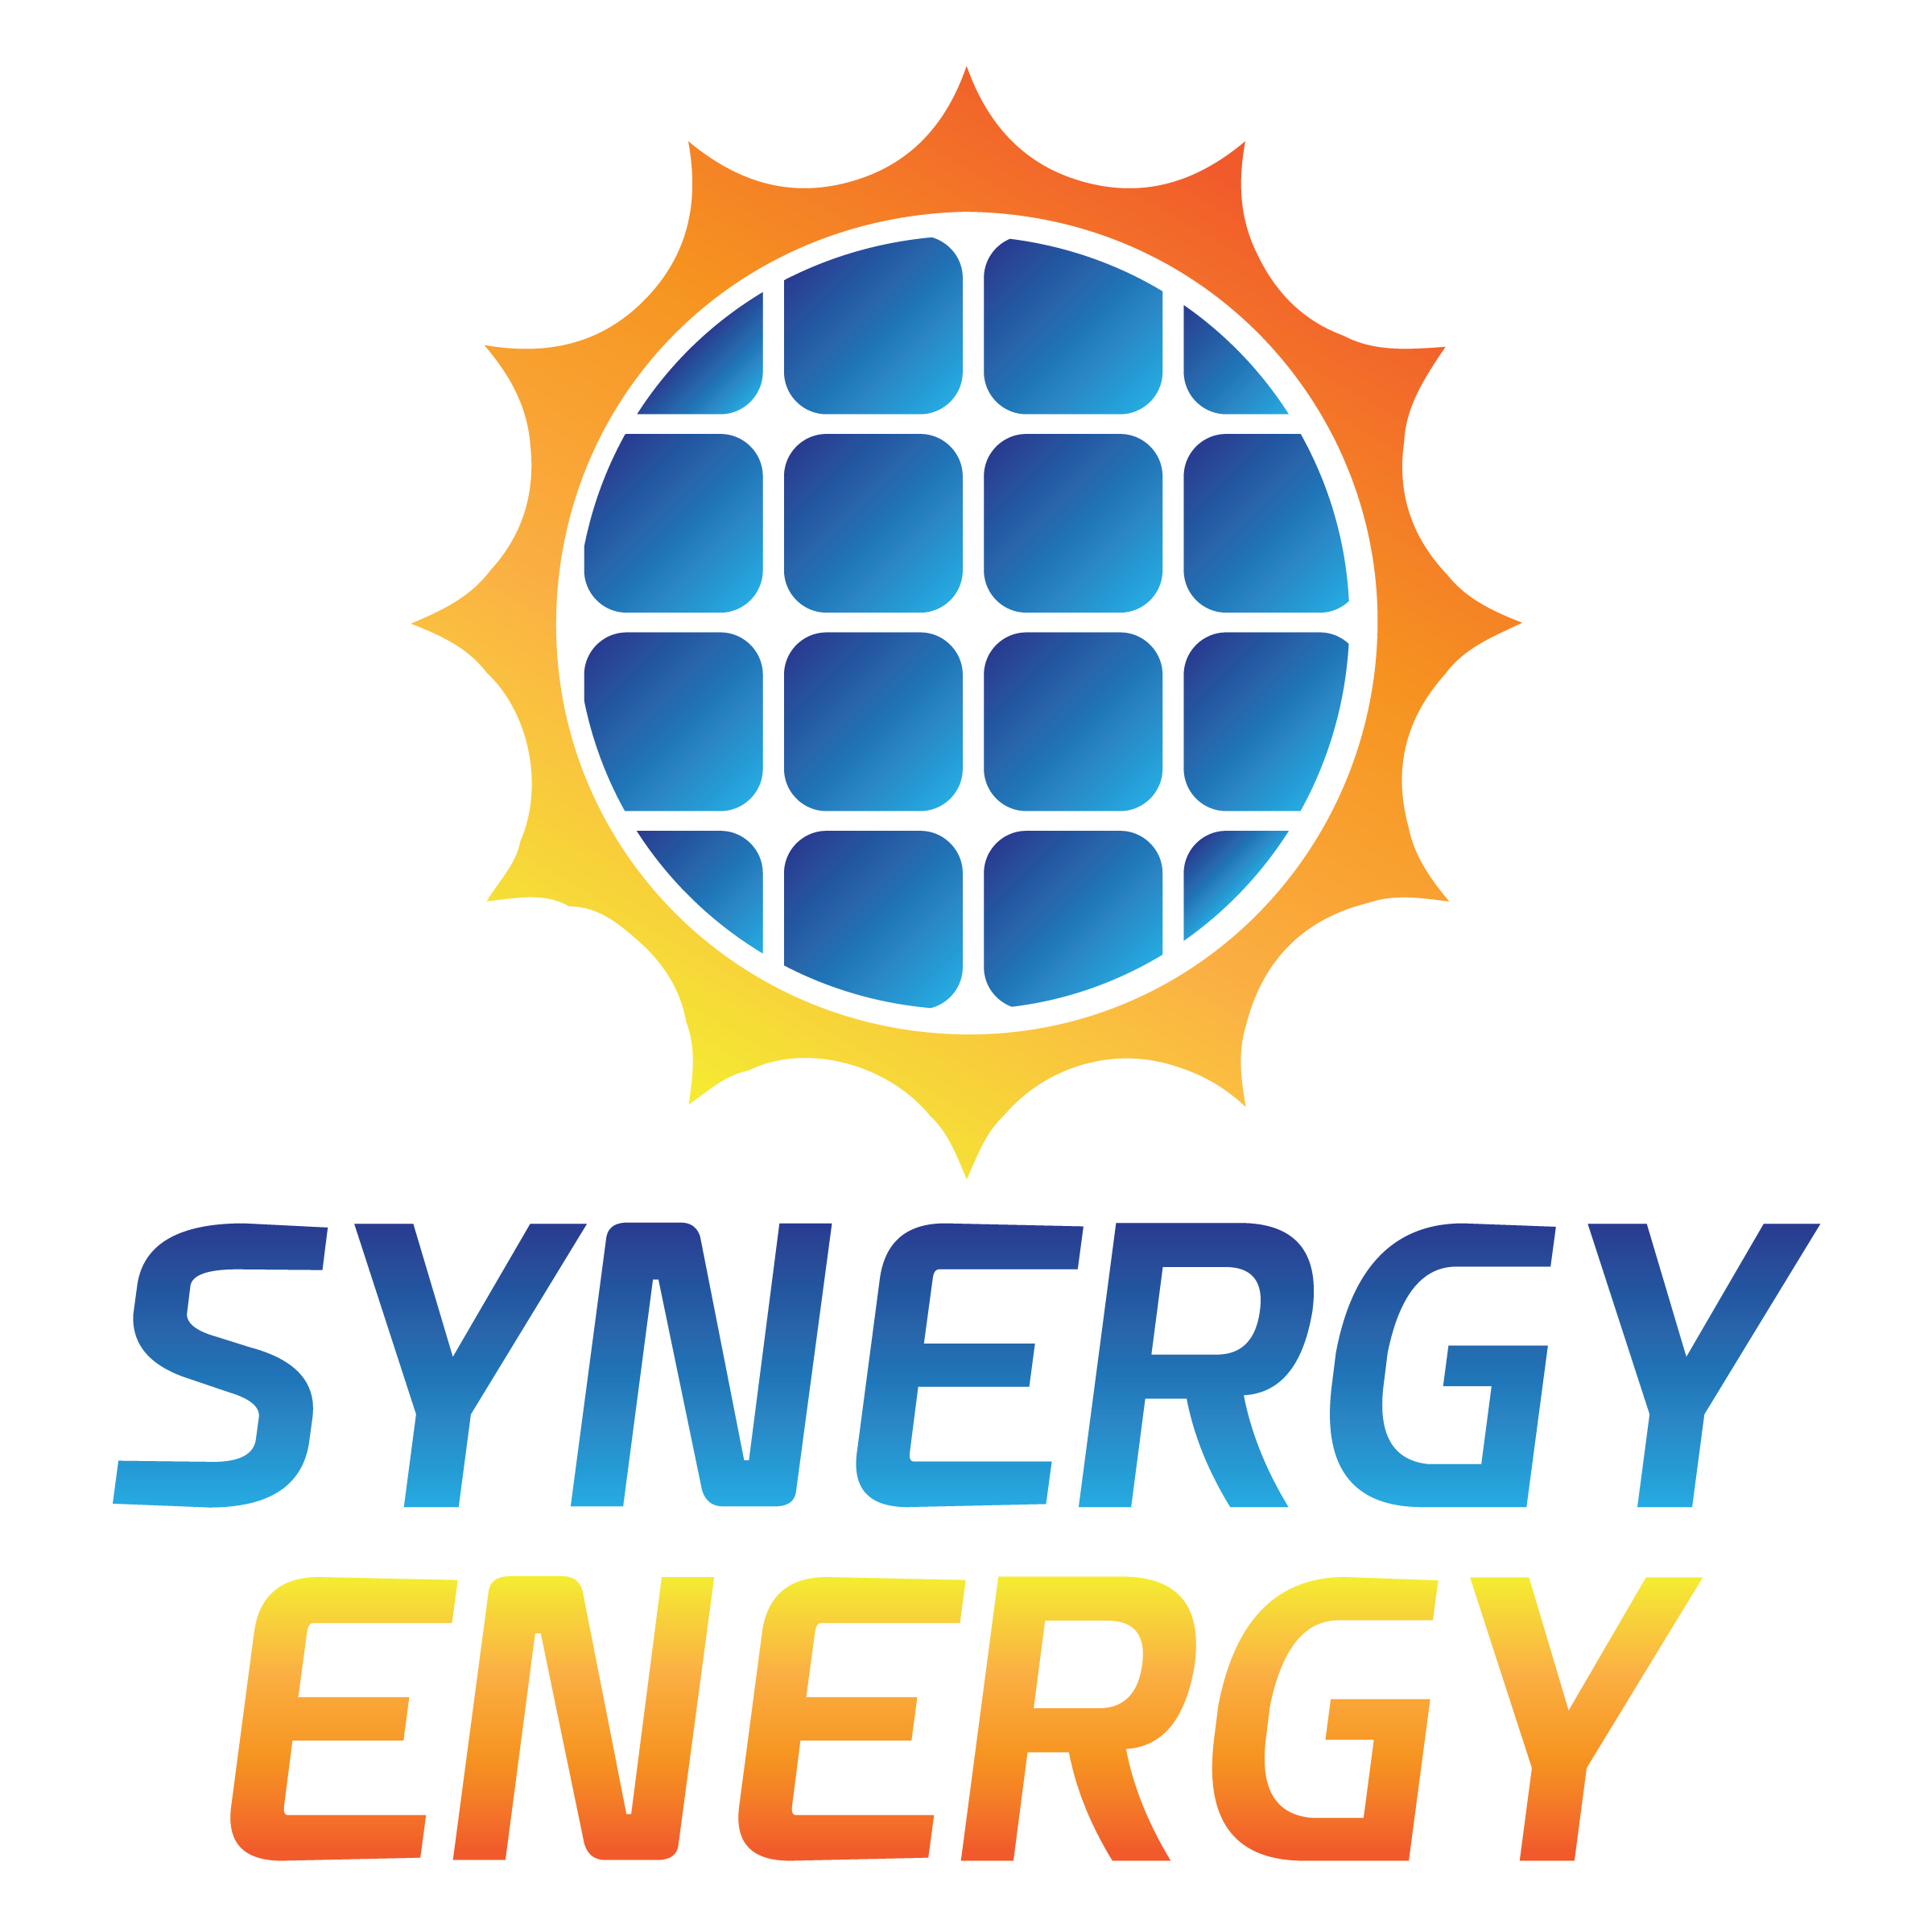 Synergy Energy Installation Solar Panels Company Logo